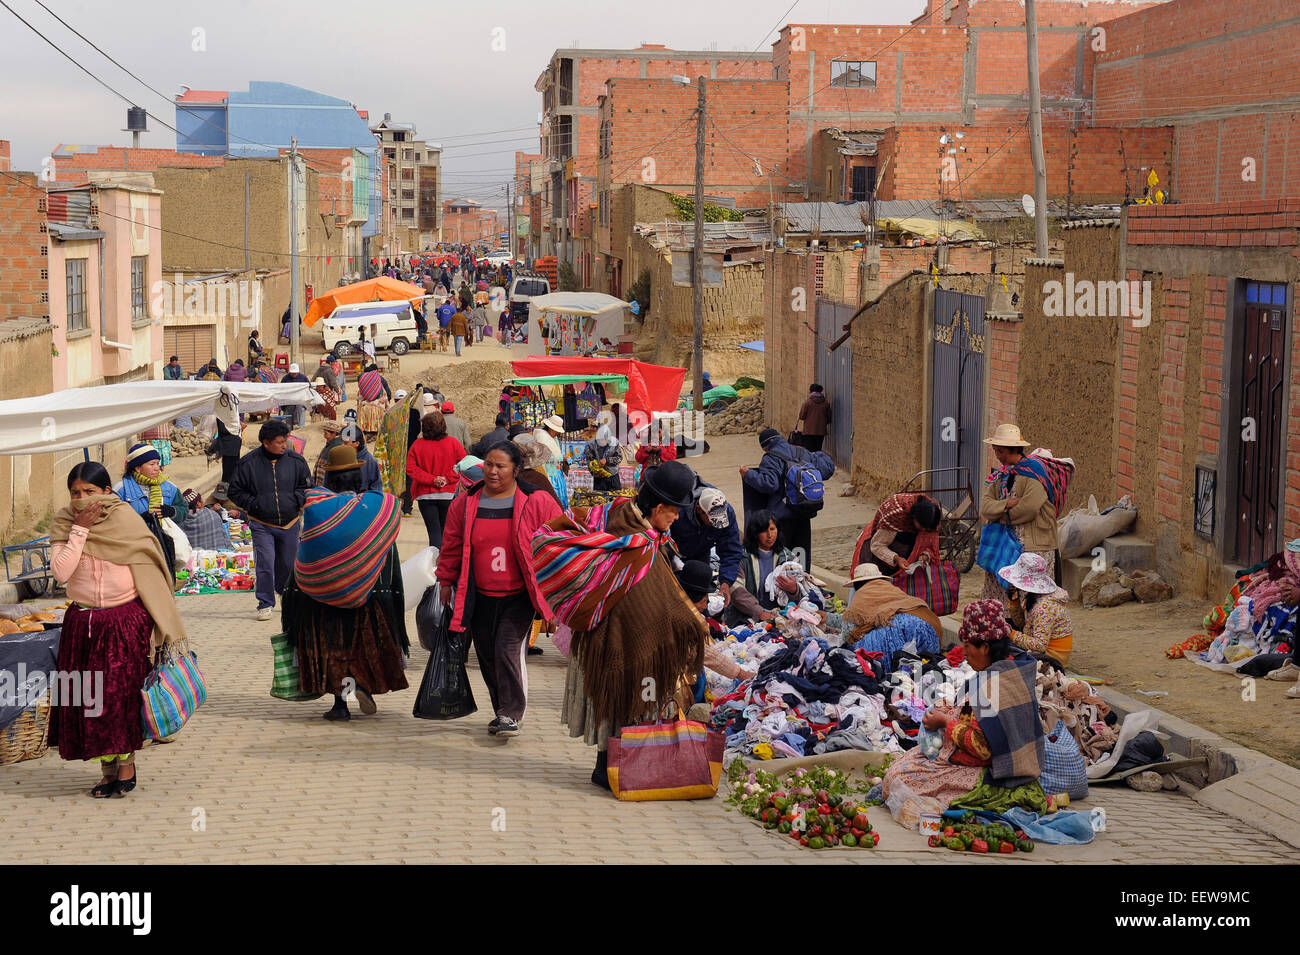 A Markt Straßenszene von El Alto, Bolivien. Stockfoto